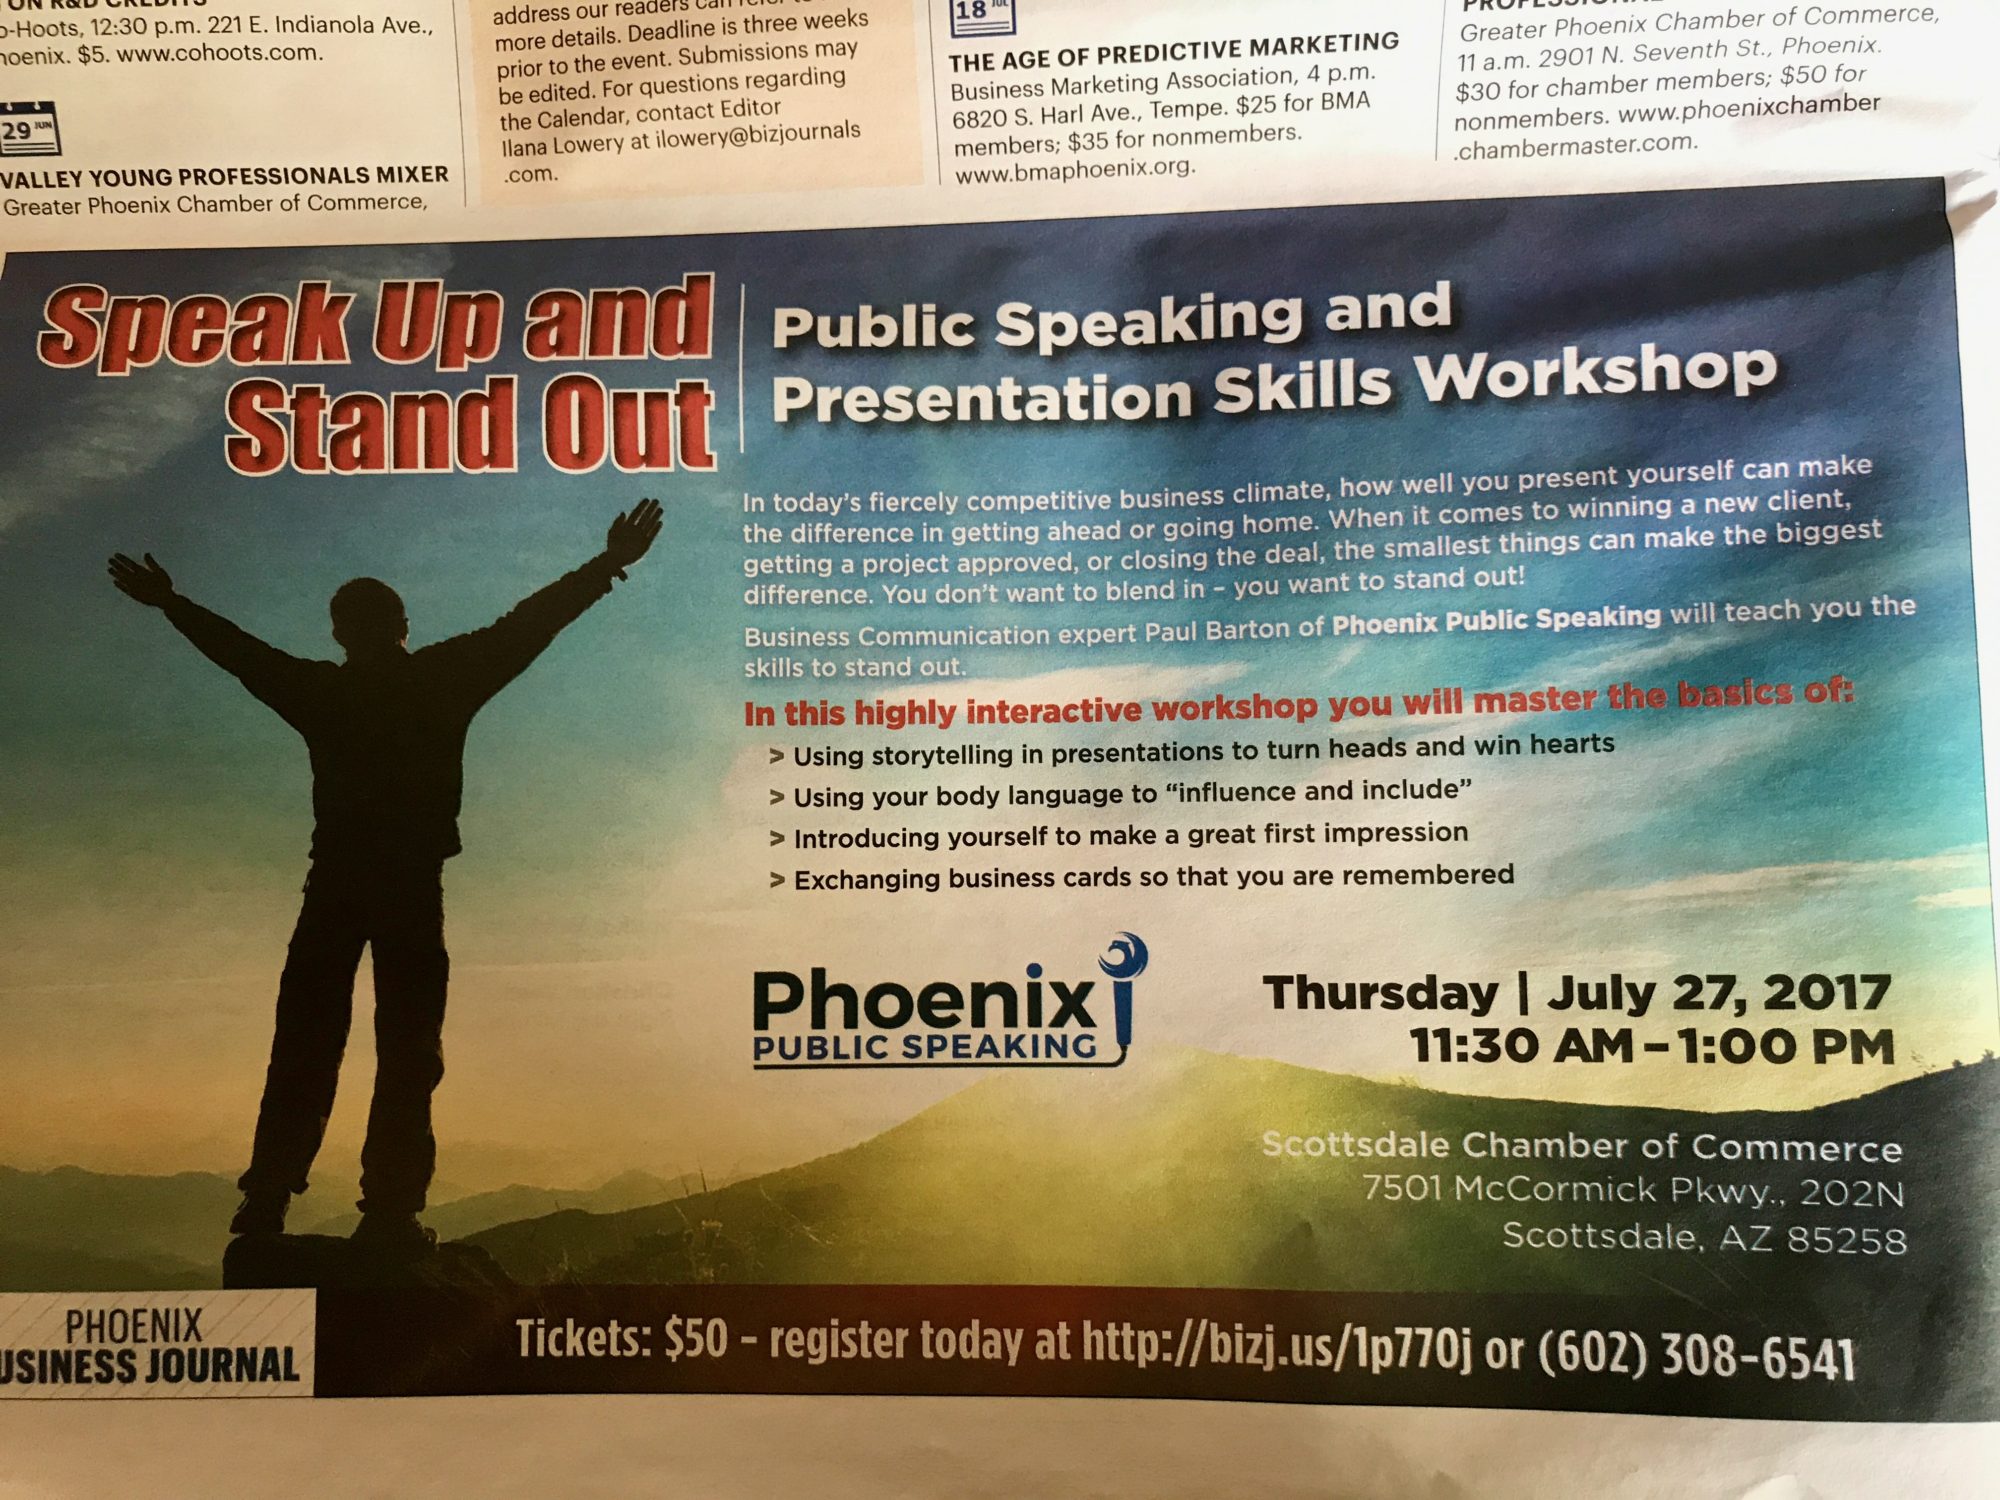 phoenix public speaking workshop